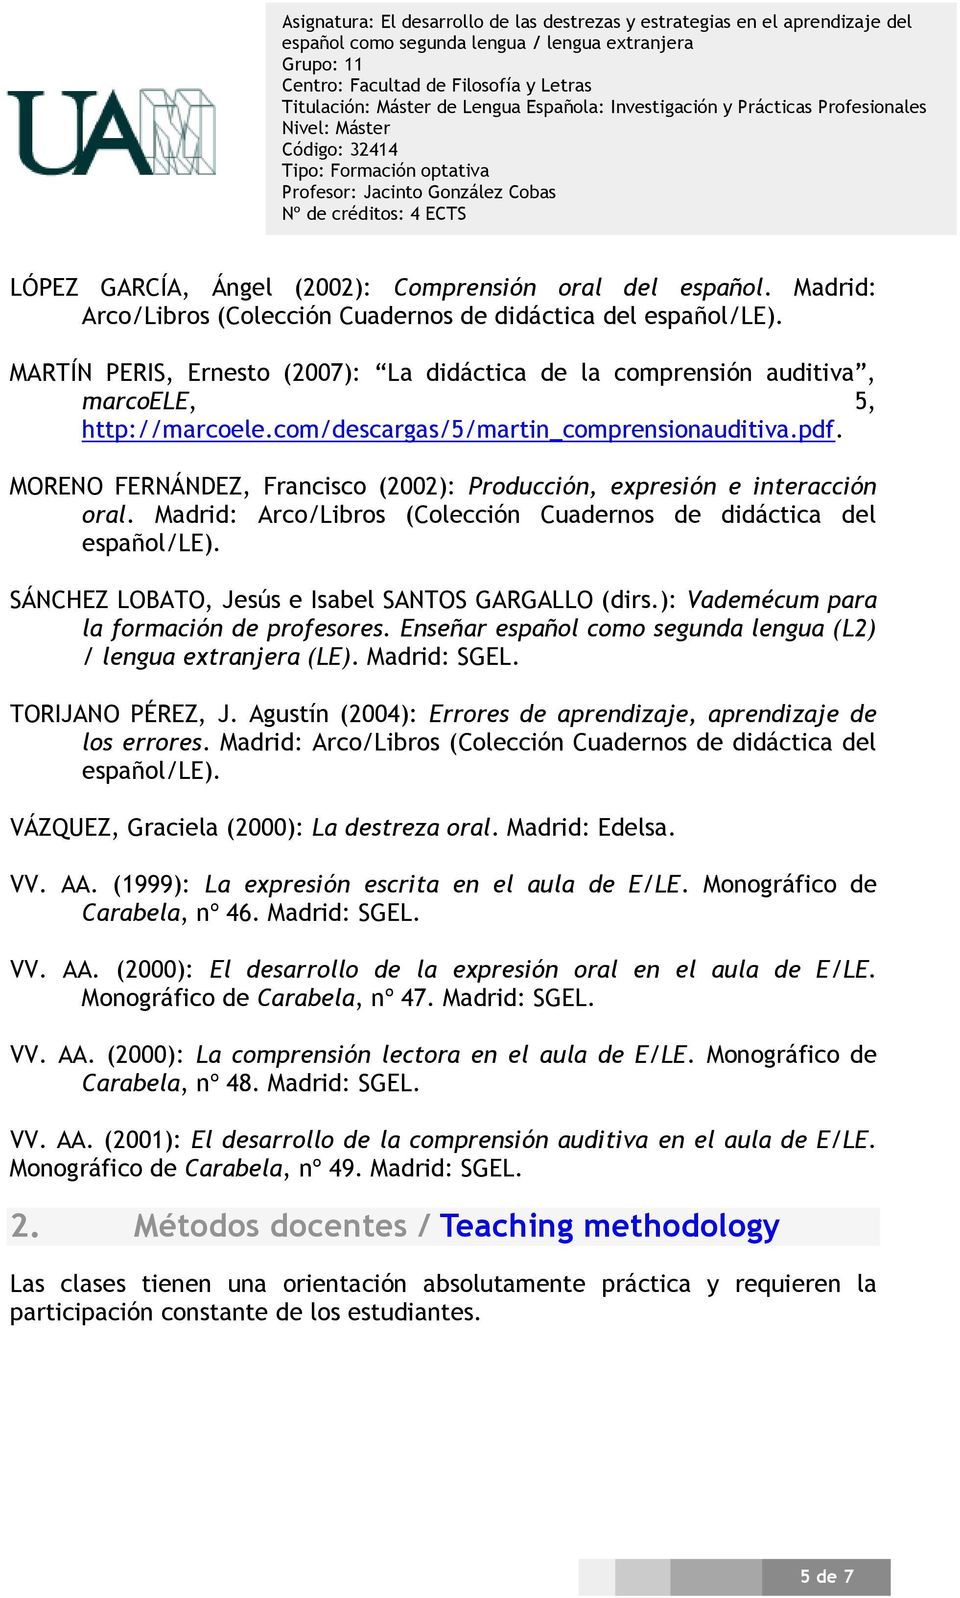 MORENO FERNÁNDEZ, Francisco (2002): Producción, expresión e interacción oral. Madrid: Arco/Libros (Colección Cuadernos de didáctica del español/le).